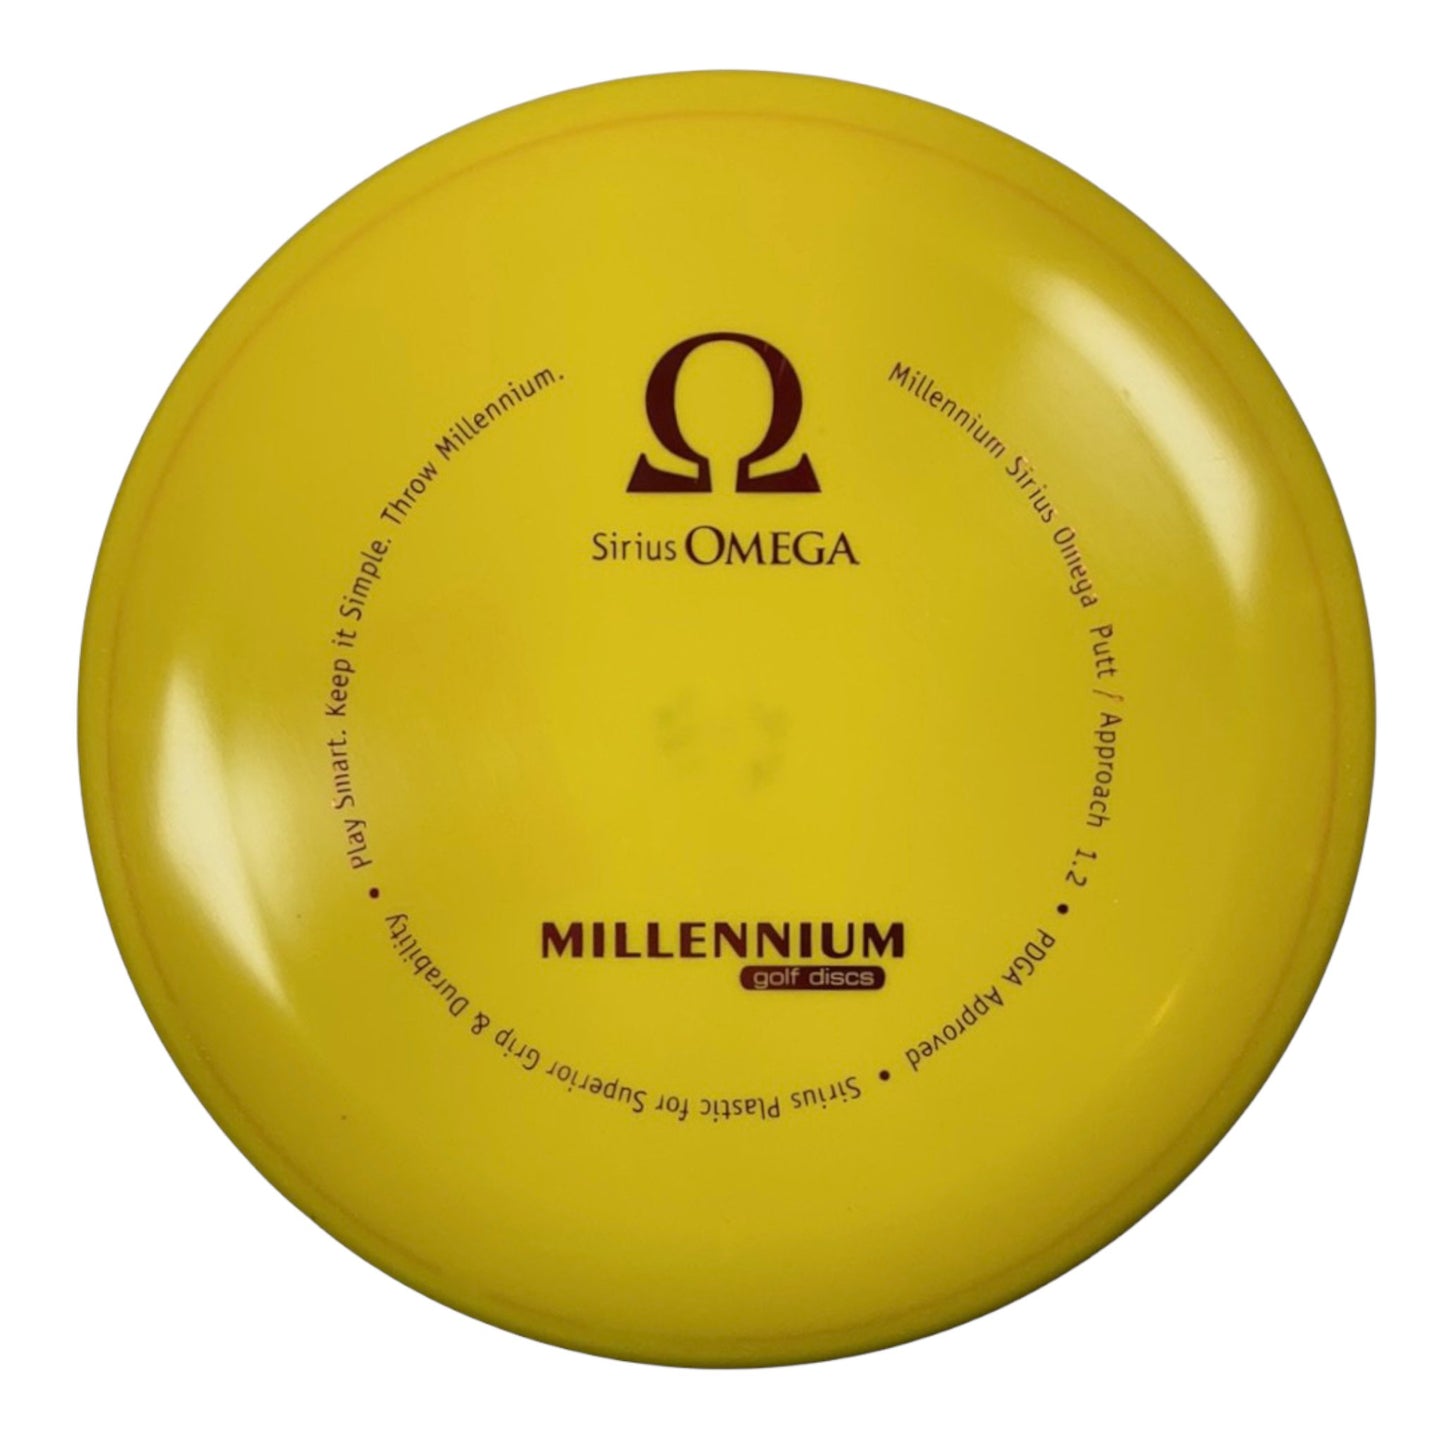 Millennium Golf Discs Omega | Sirius | Yellow/Red 166g Disc Golf